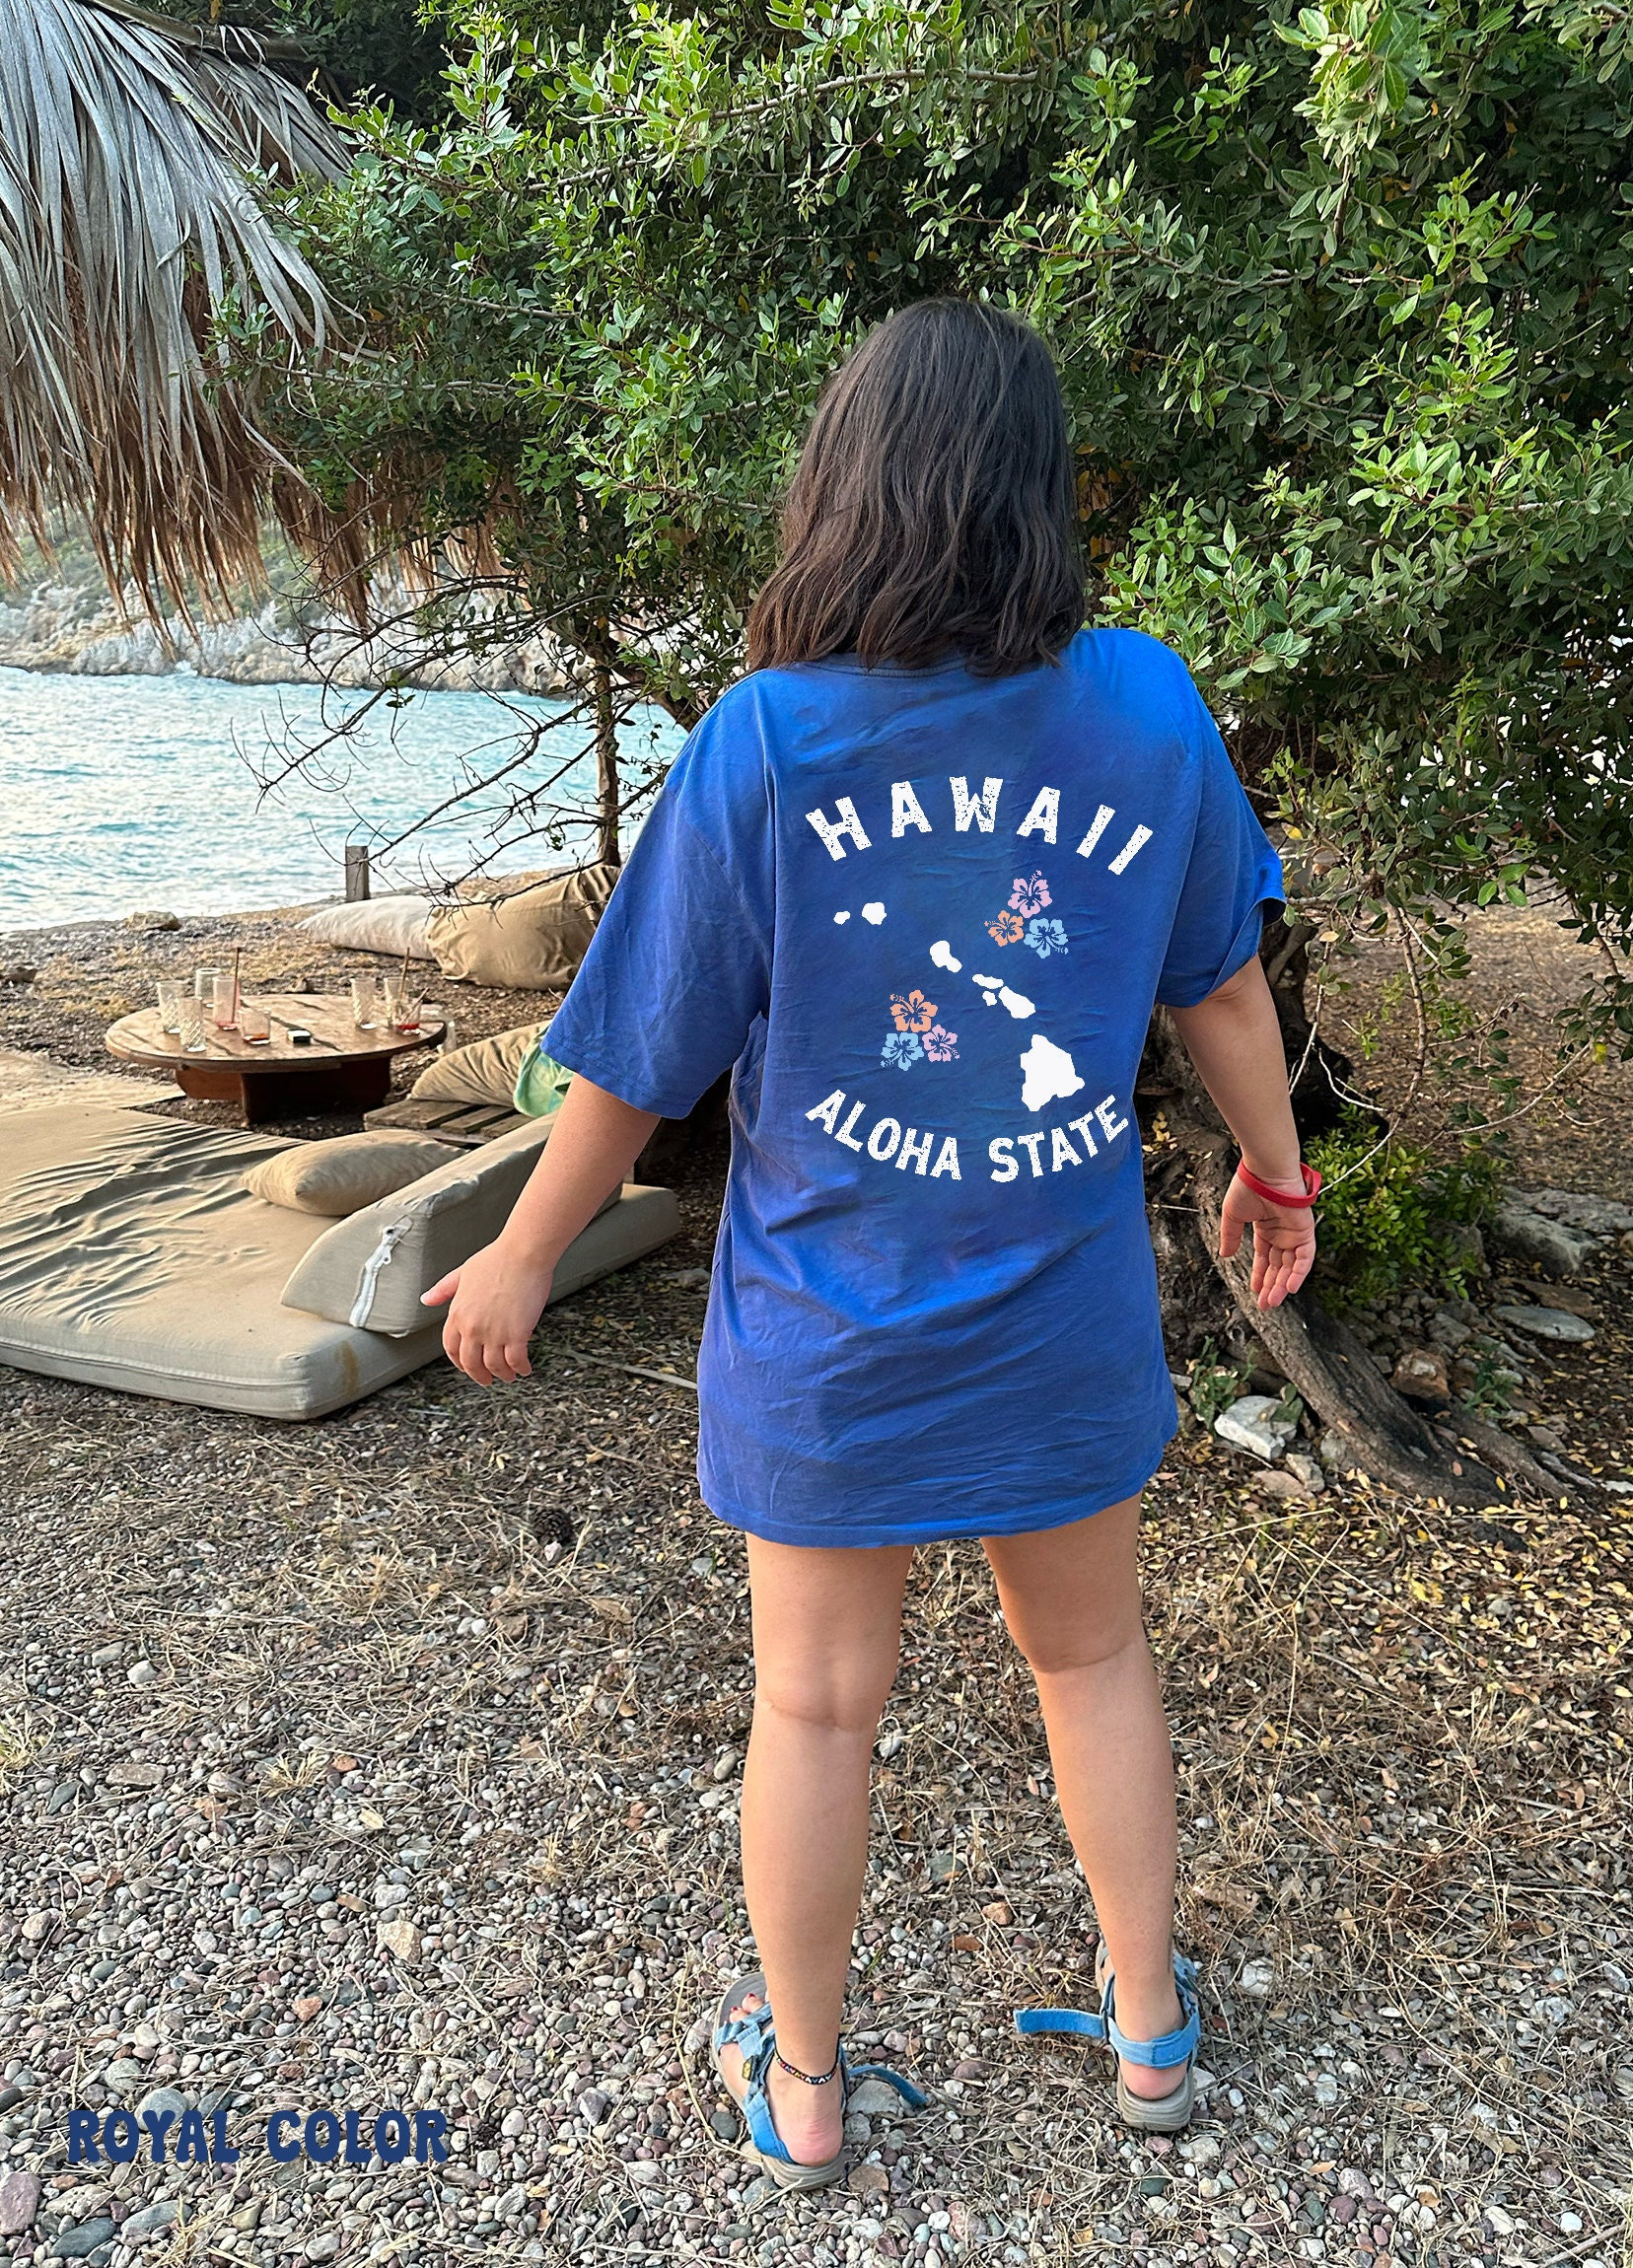 Coconut Bra Flower Boobs Hawaii Aloha Beaches Funny Shirt Essential  T-Shirt for Sale by tikius